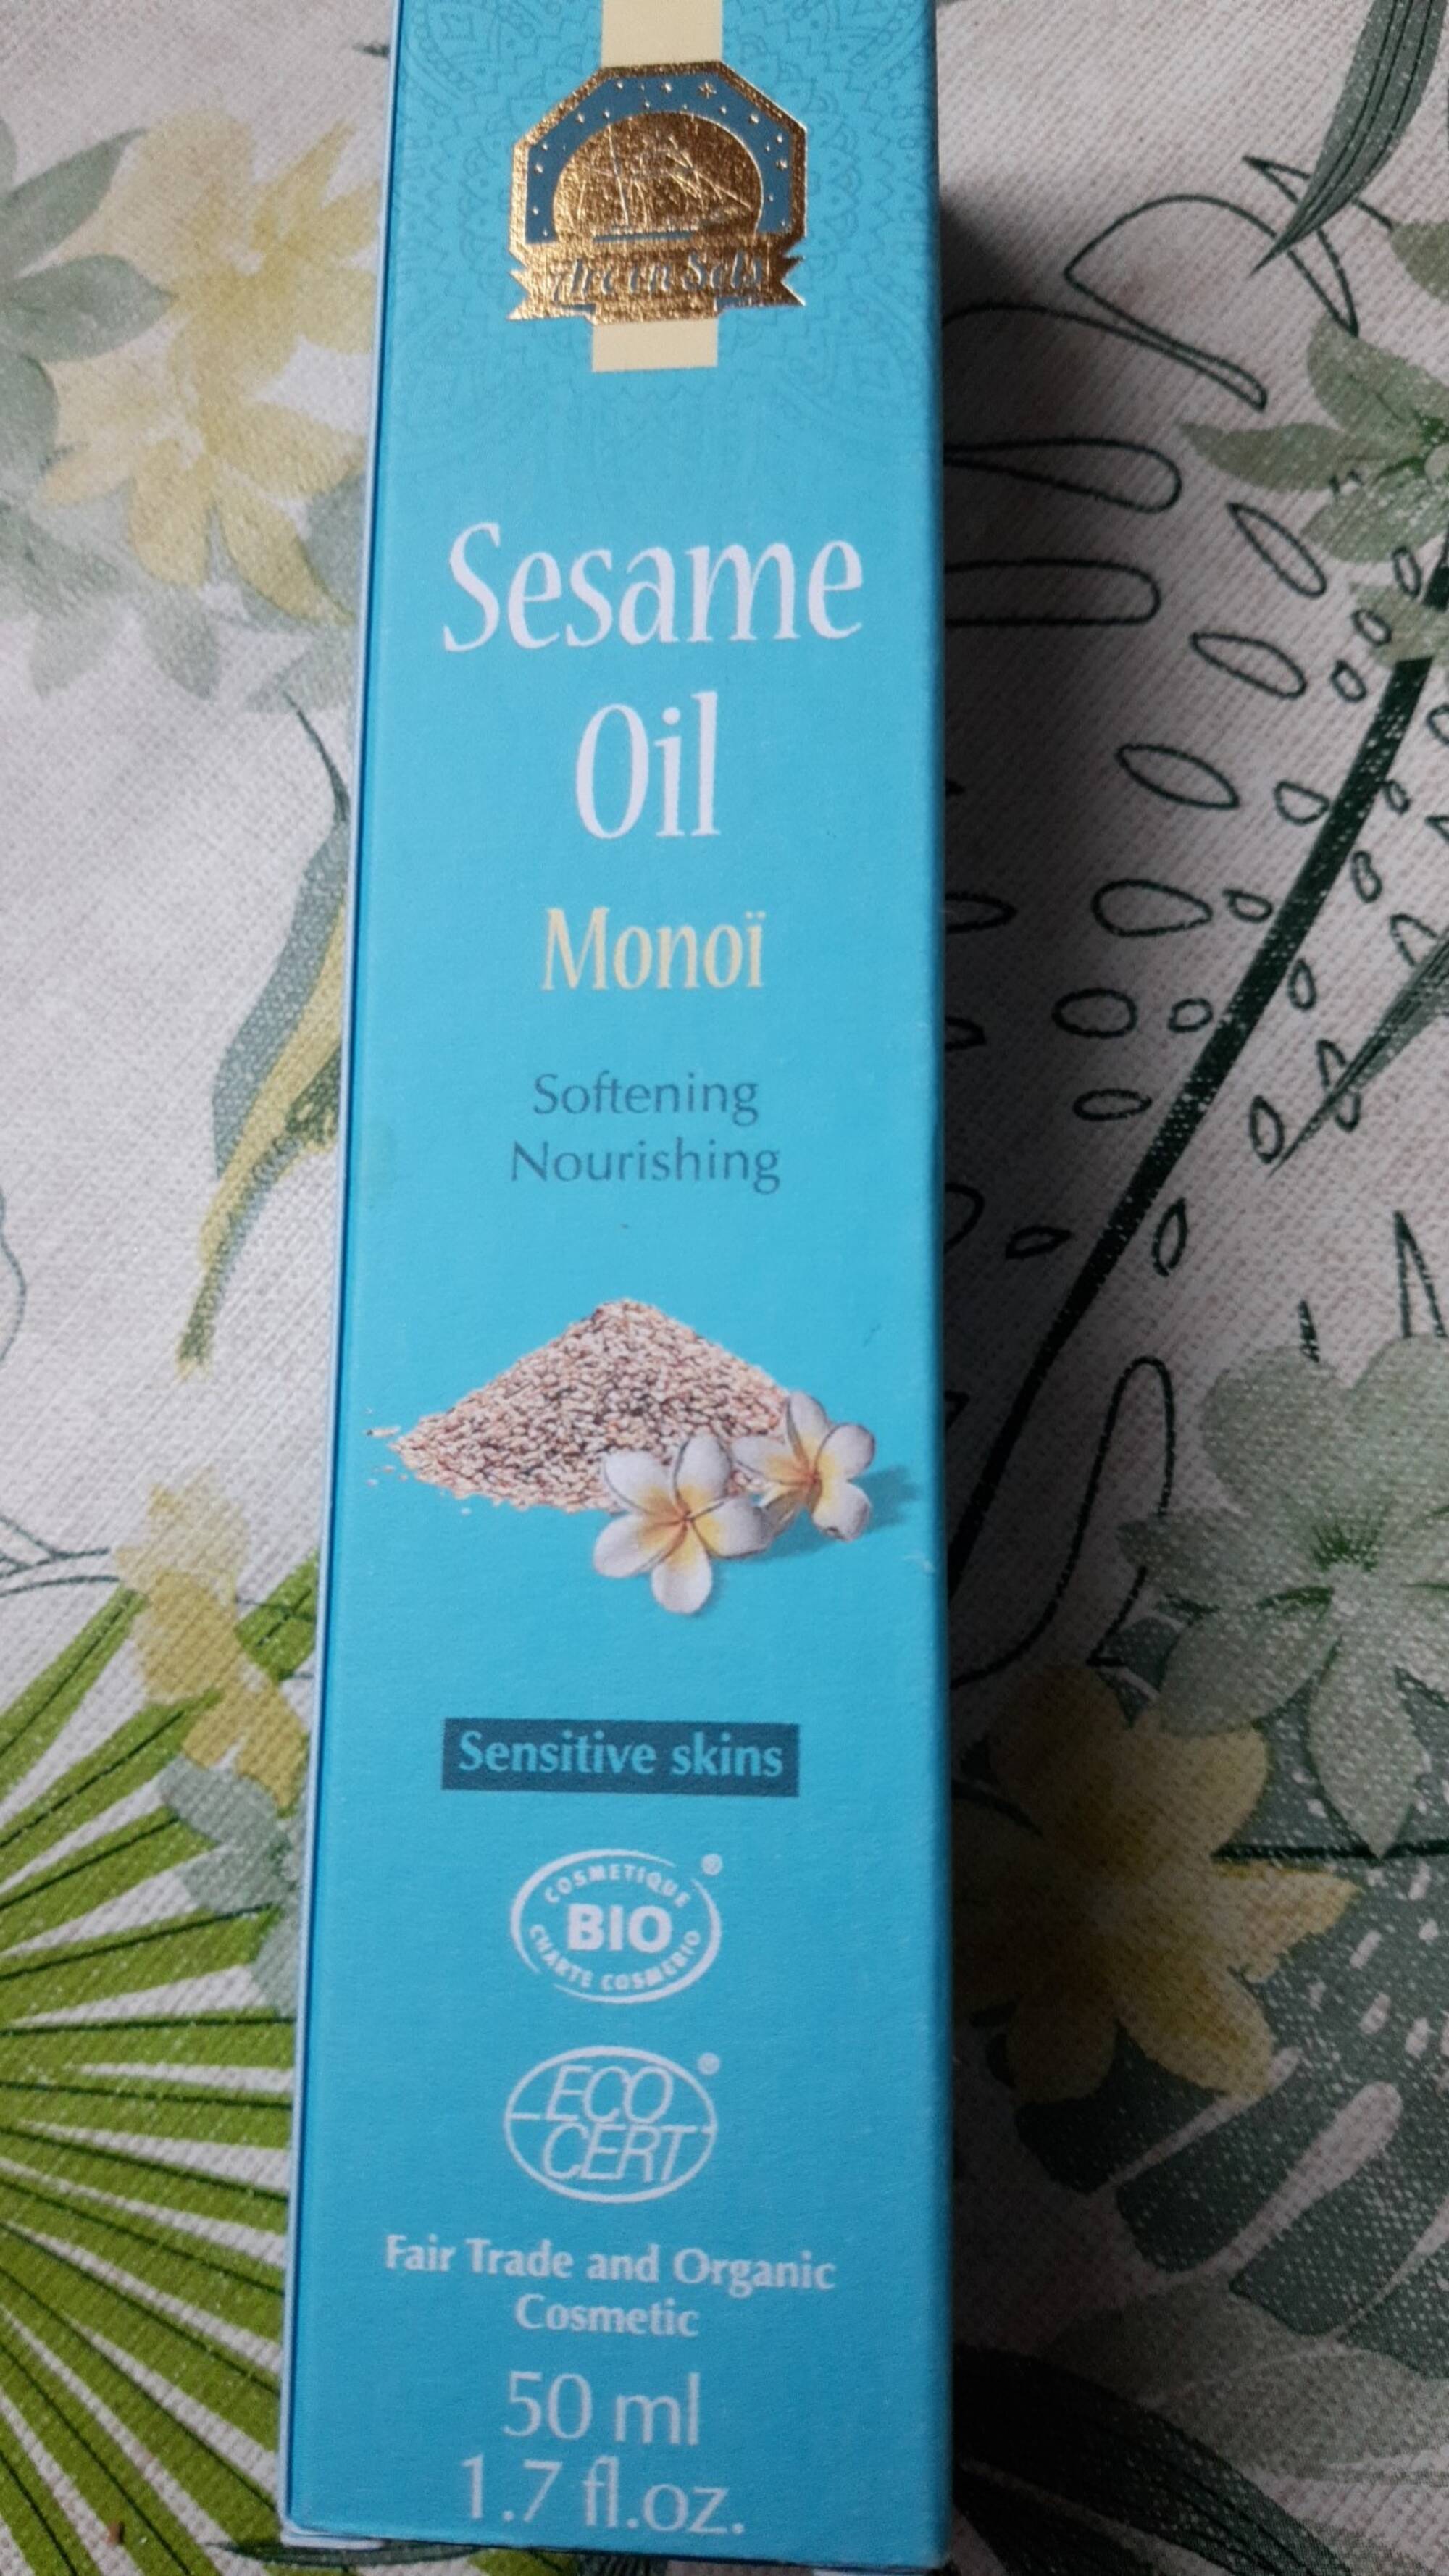 ARCS EN SELS - Sesame oil monoï 